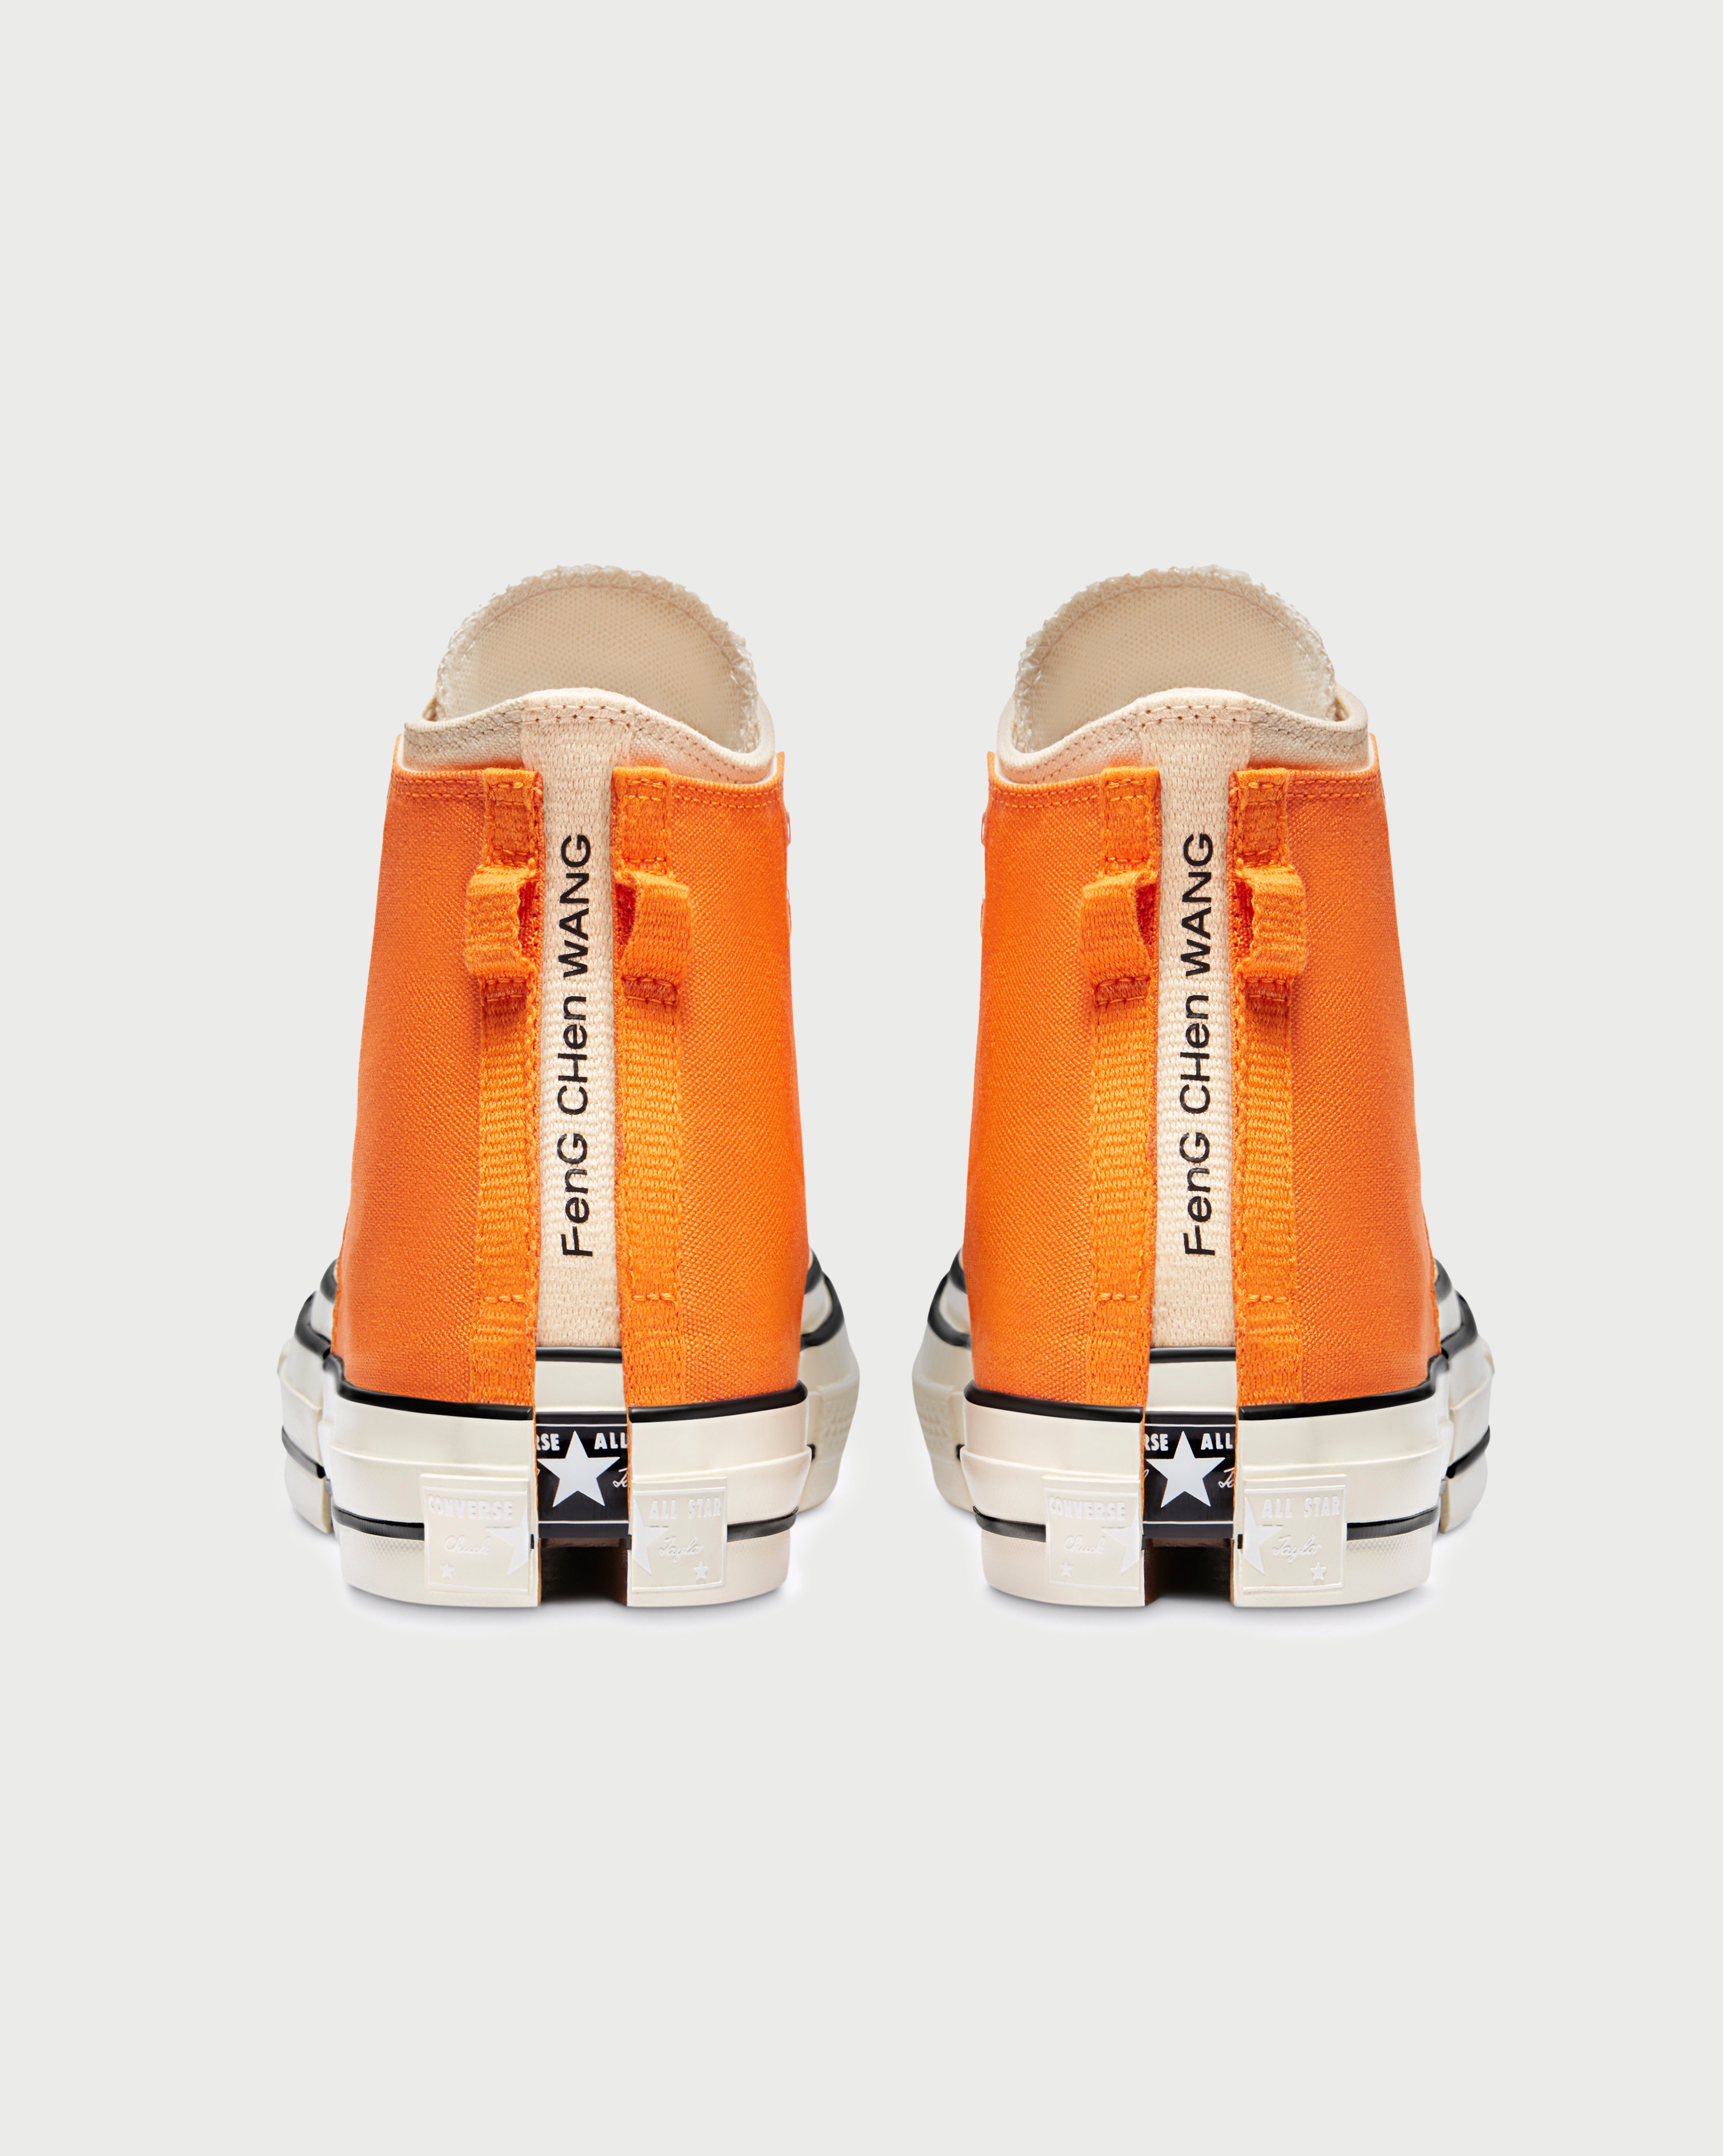 Converse x Feng Chen Wang - 2-in-1 Chuck 70 High Persimmon Orange - Footwear - Orange - Image 3